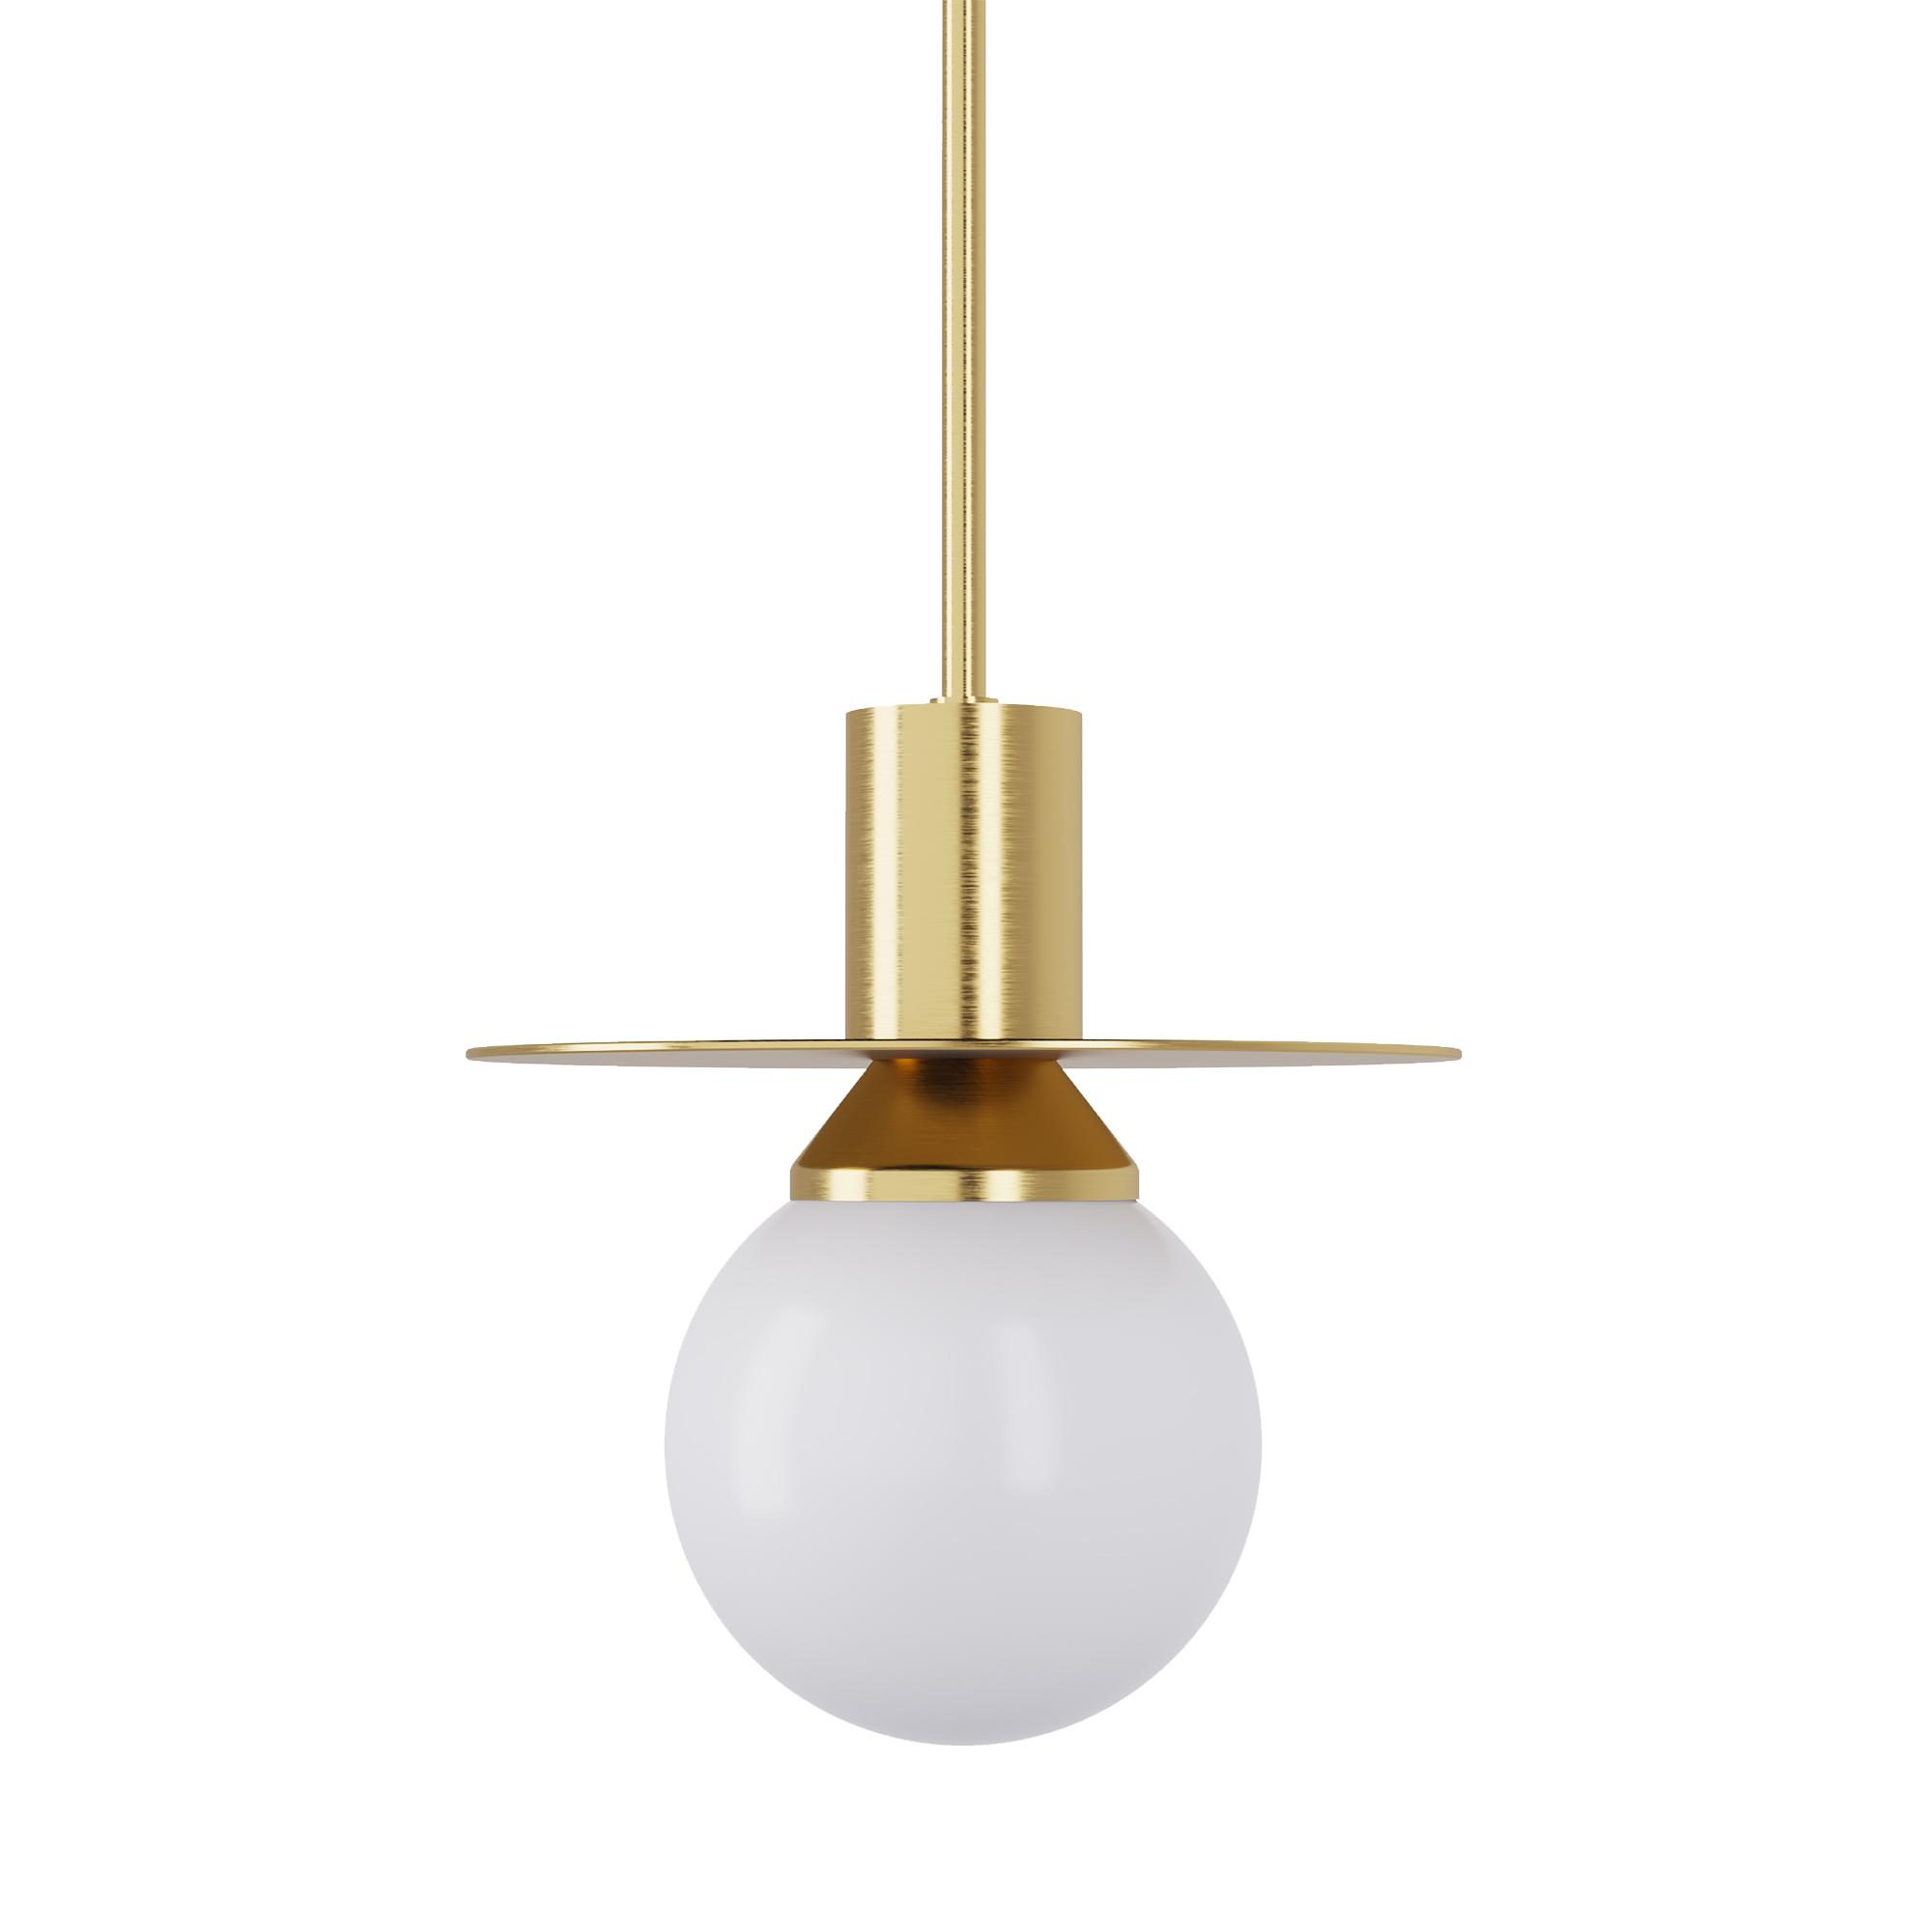 Bono lamp, SKU. 23698 by Pikartlights 3d model